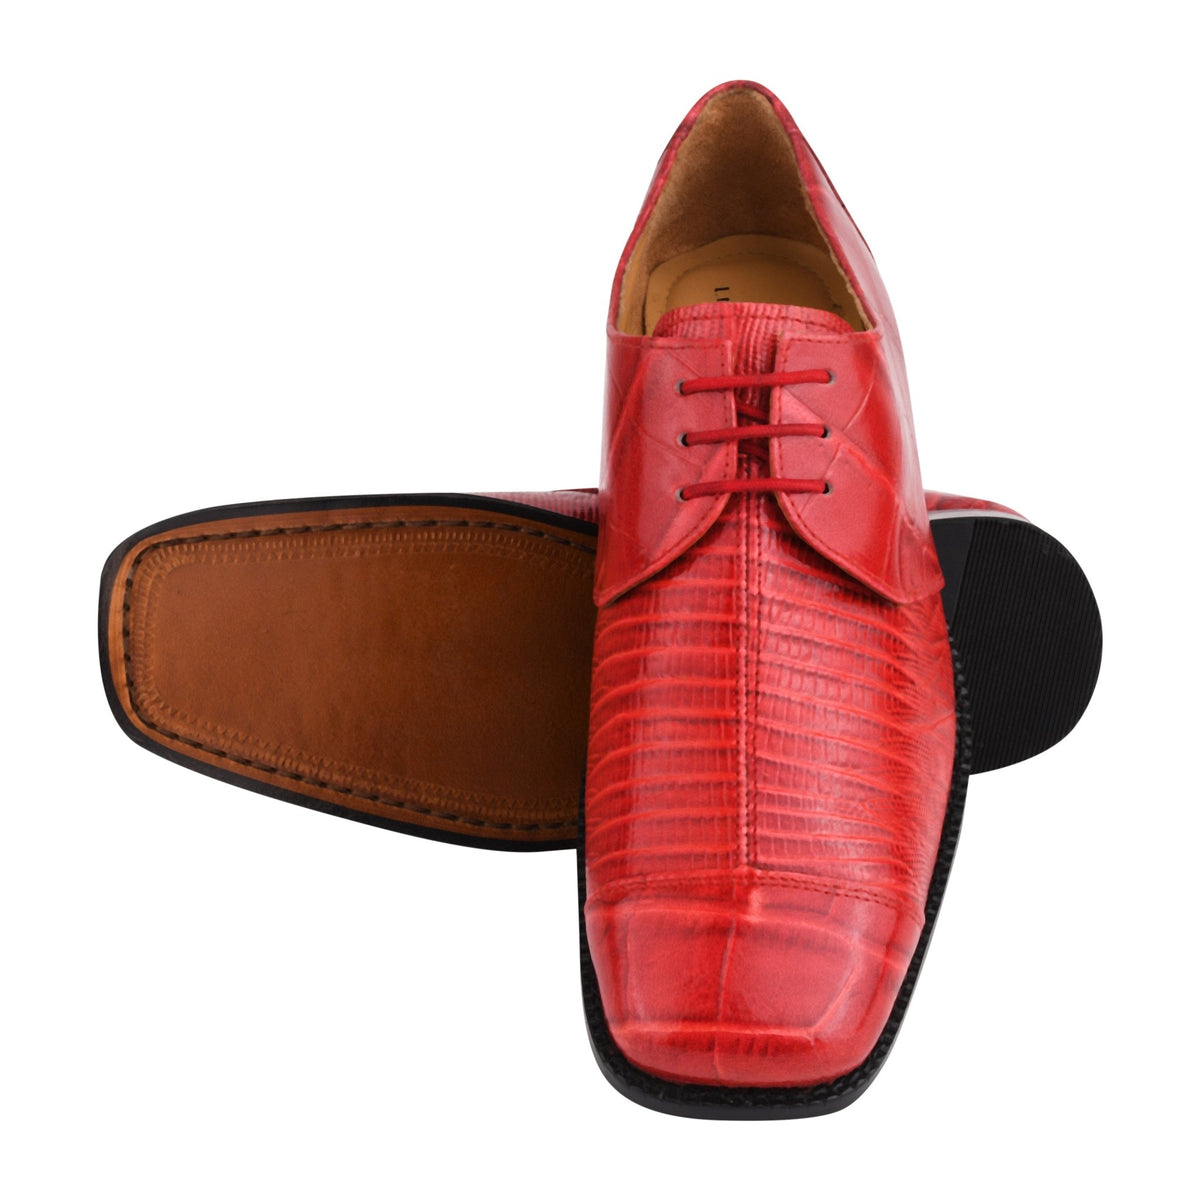 New Men's Handmade Formal Shoes Navy Blue Shaded Crocodile 